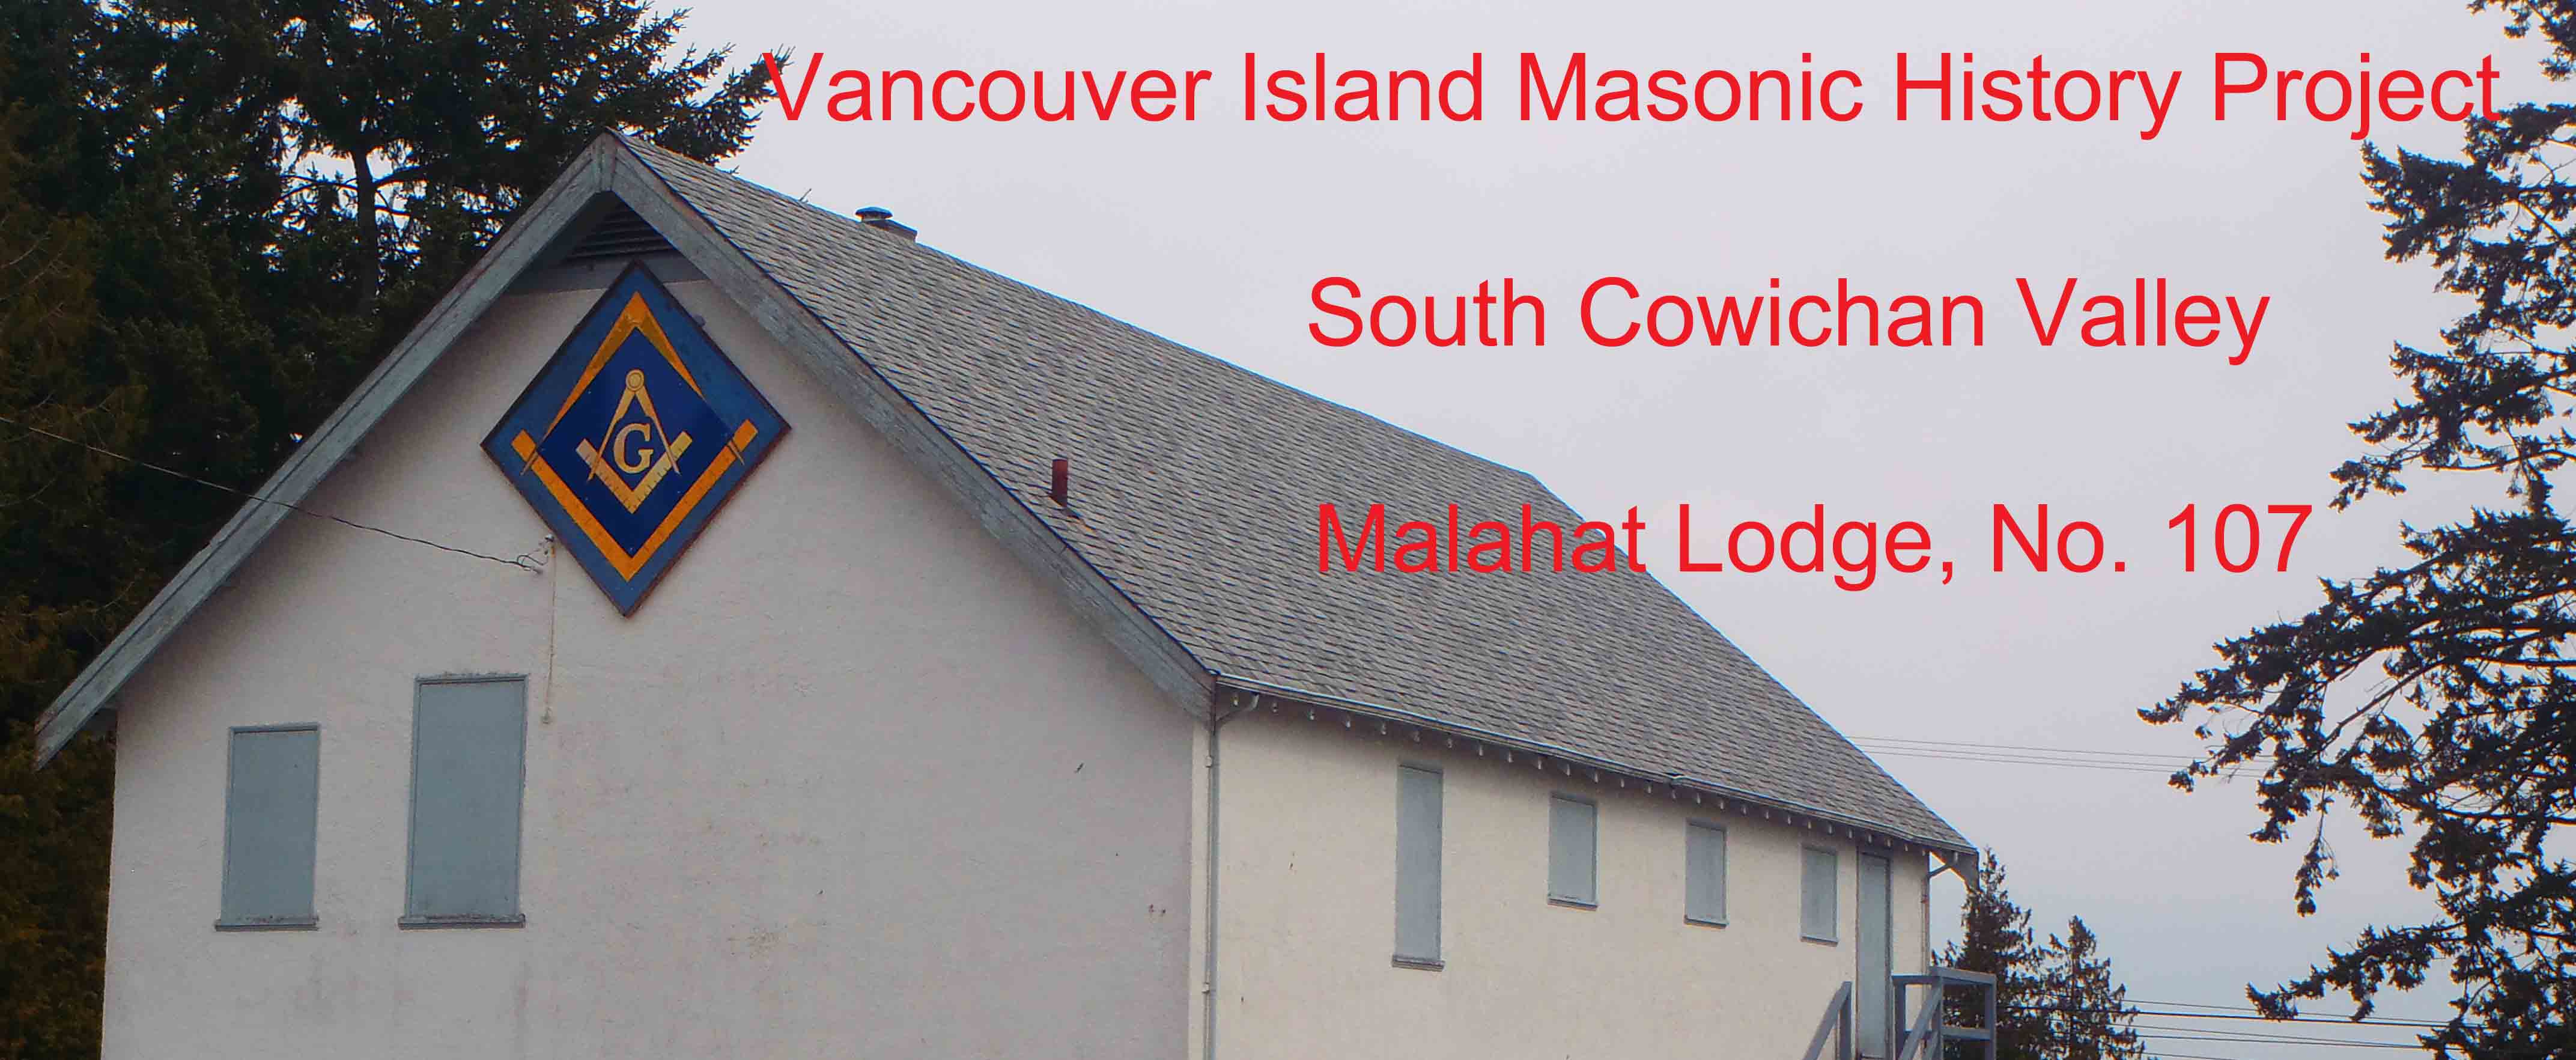 Vancouver Island Masonic History Project - South Cowichan